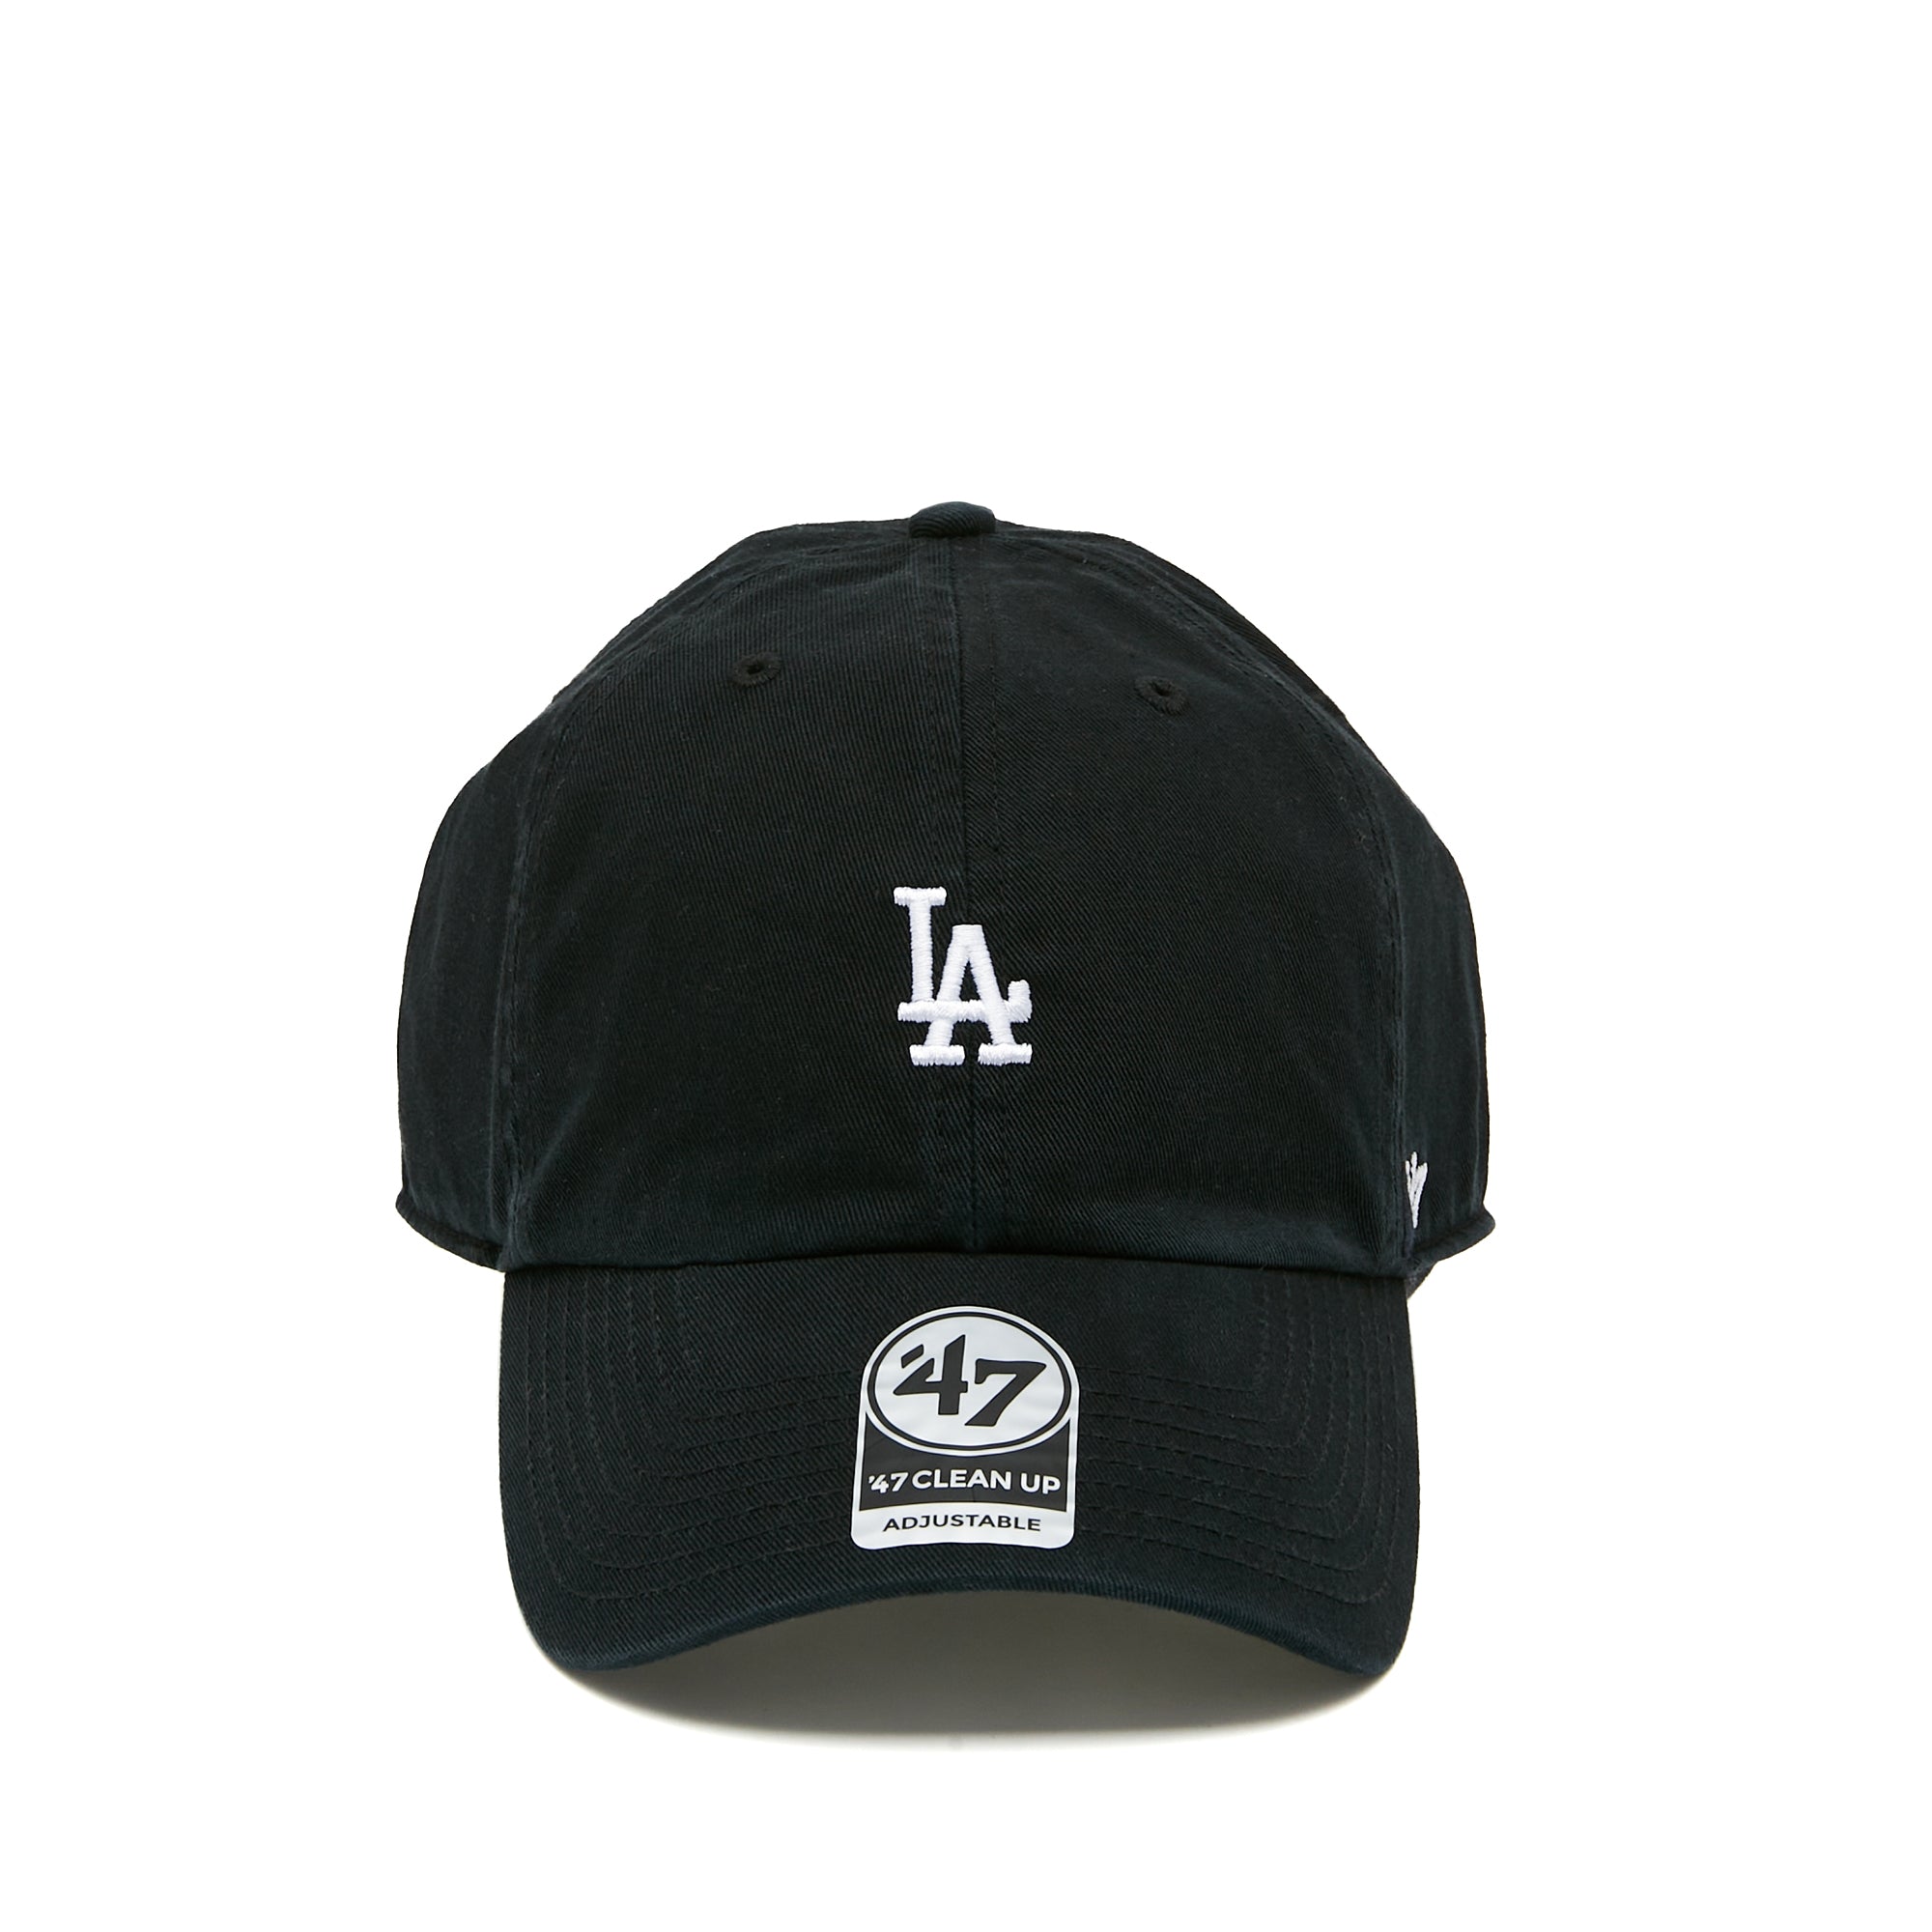 MLB Los Angeles Dodgers Base Runner Cap Black One Size